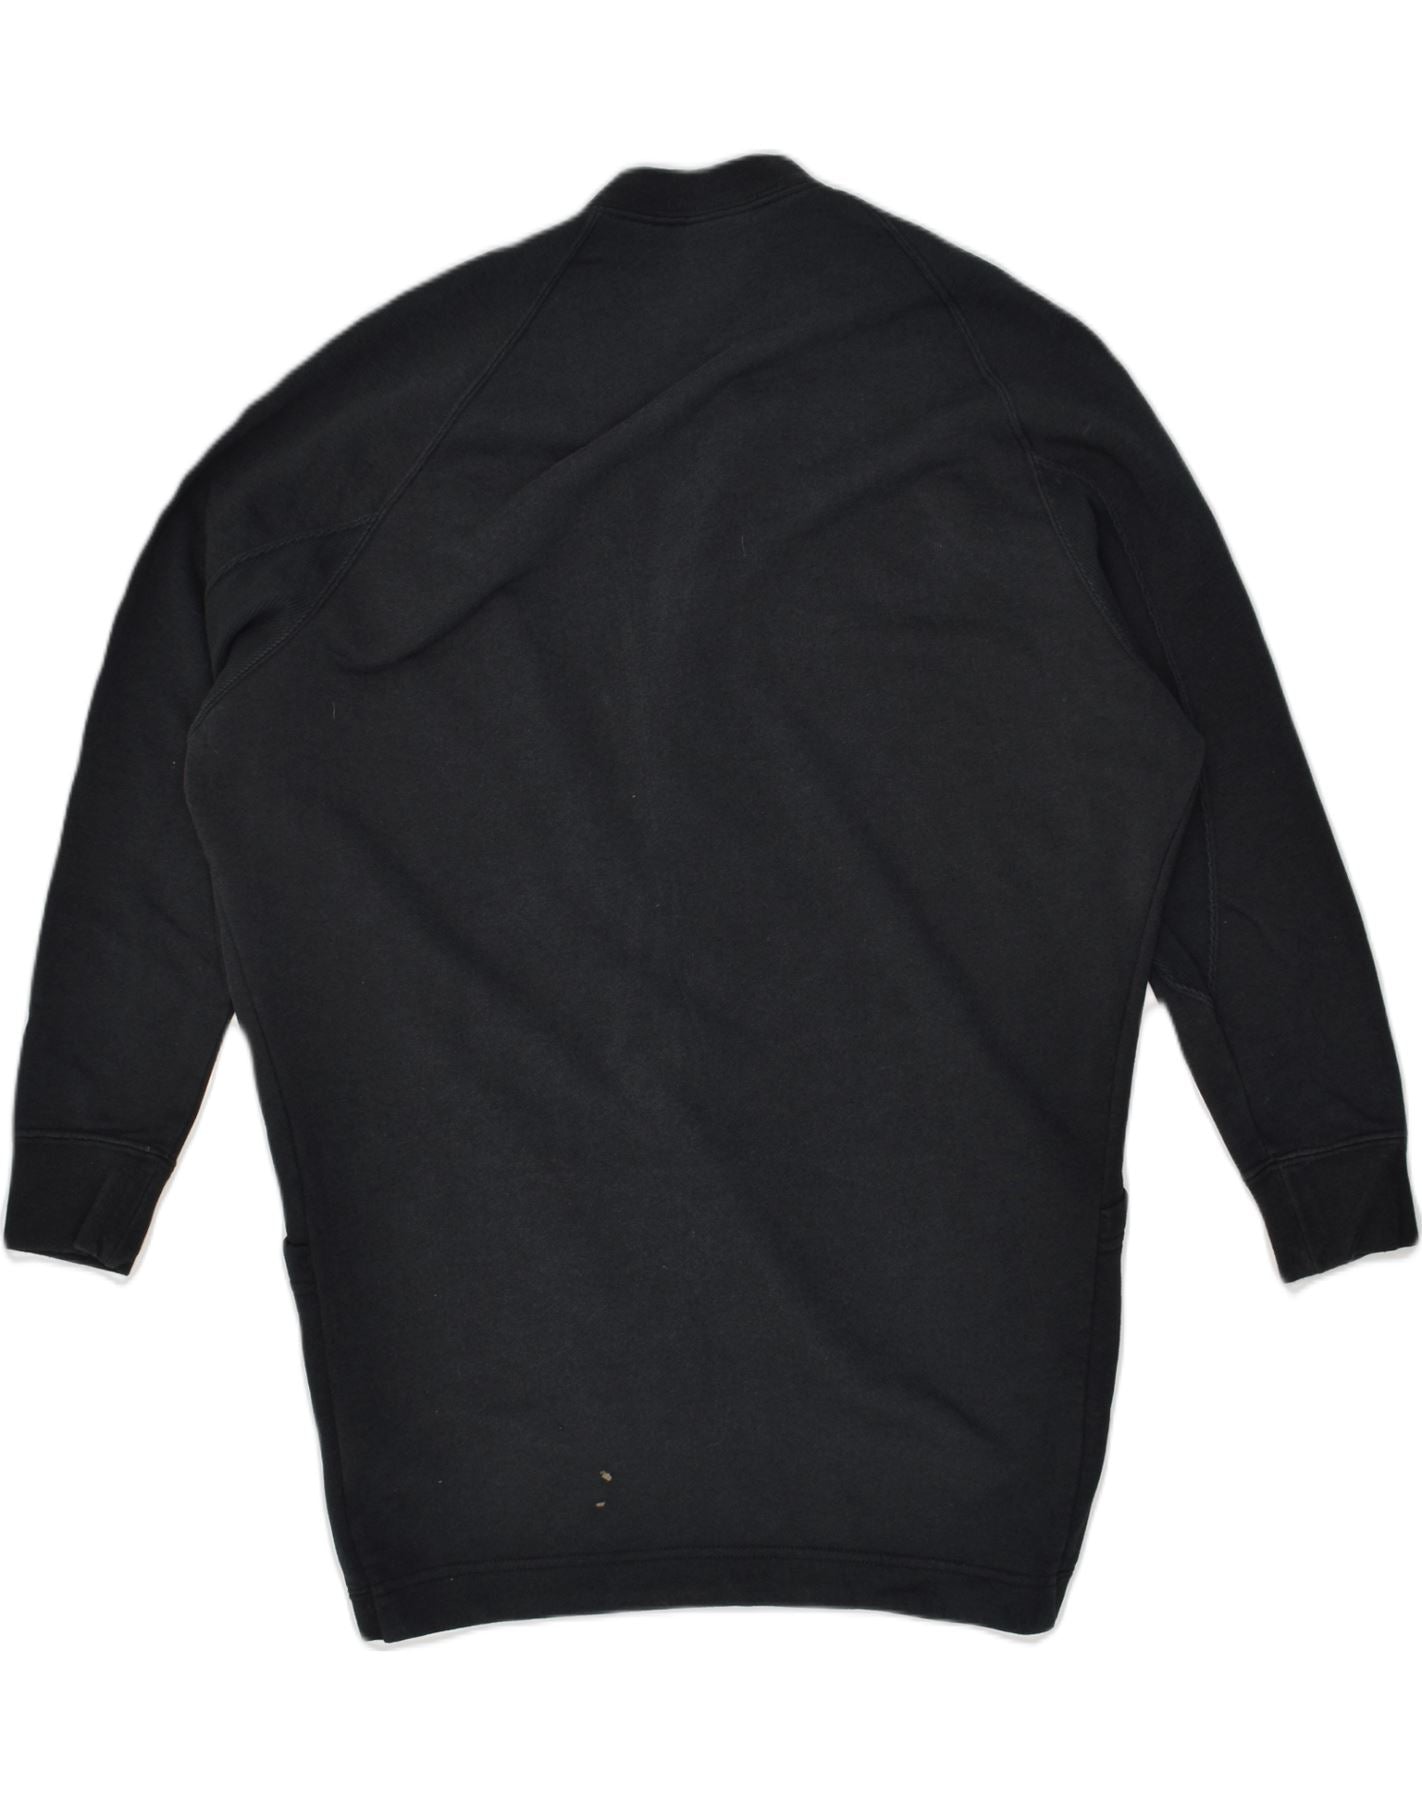 Buy Black Sweaters & Cardigans for Women by NIKE Online